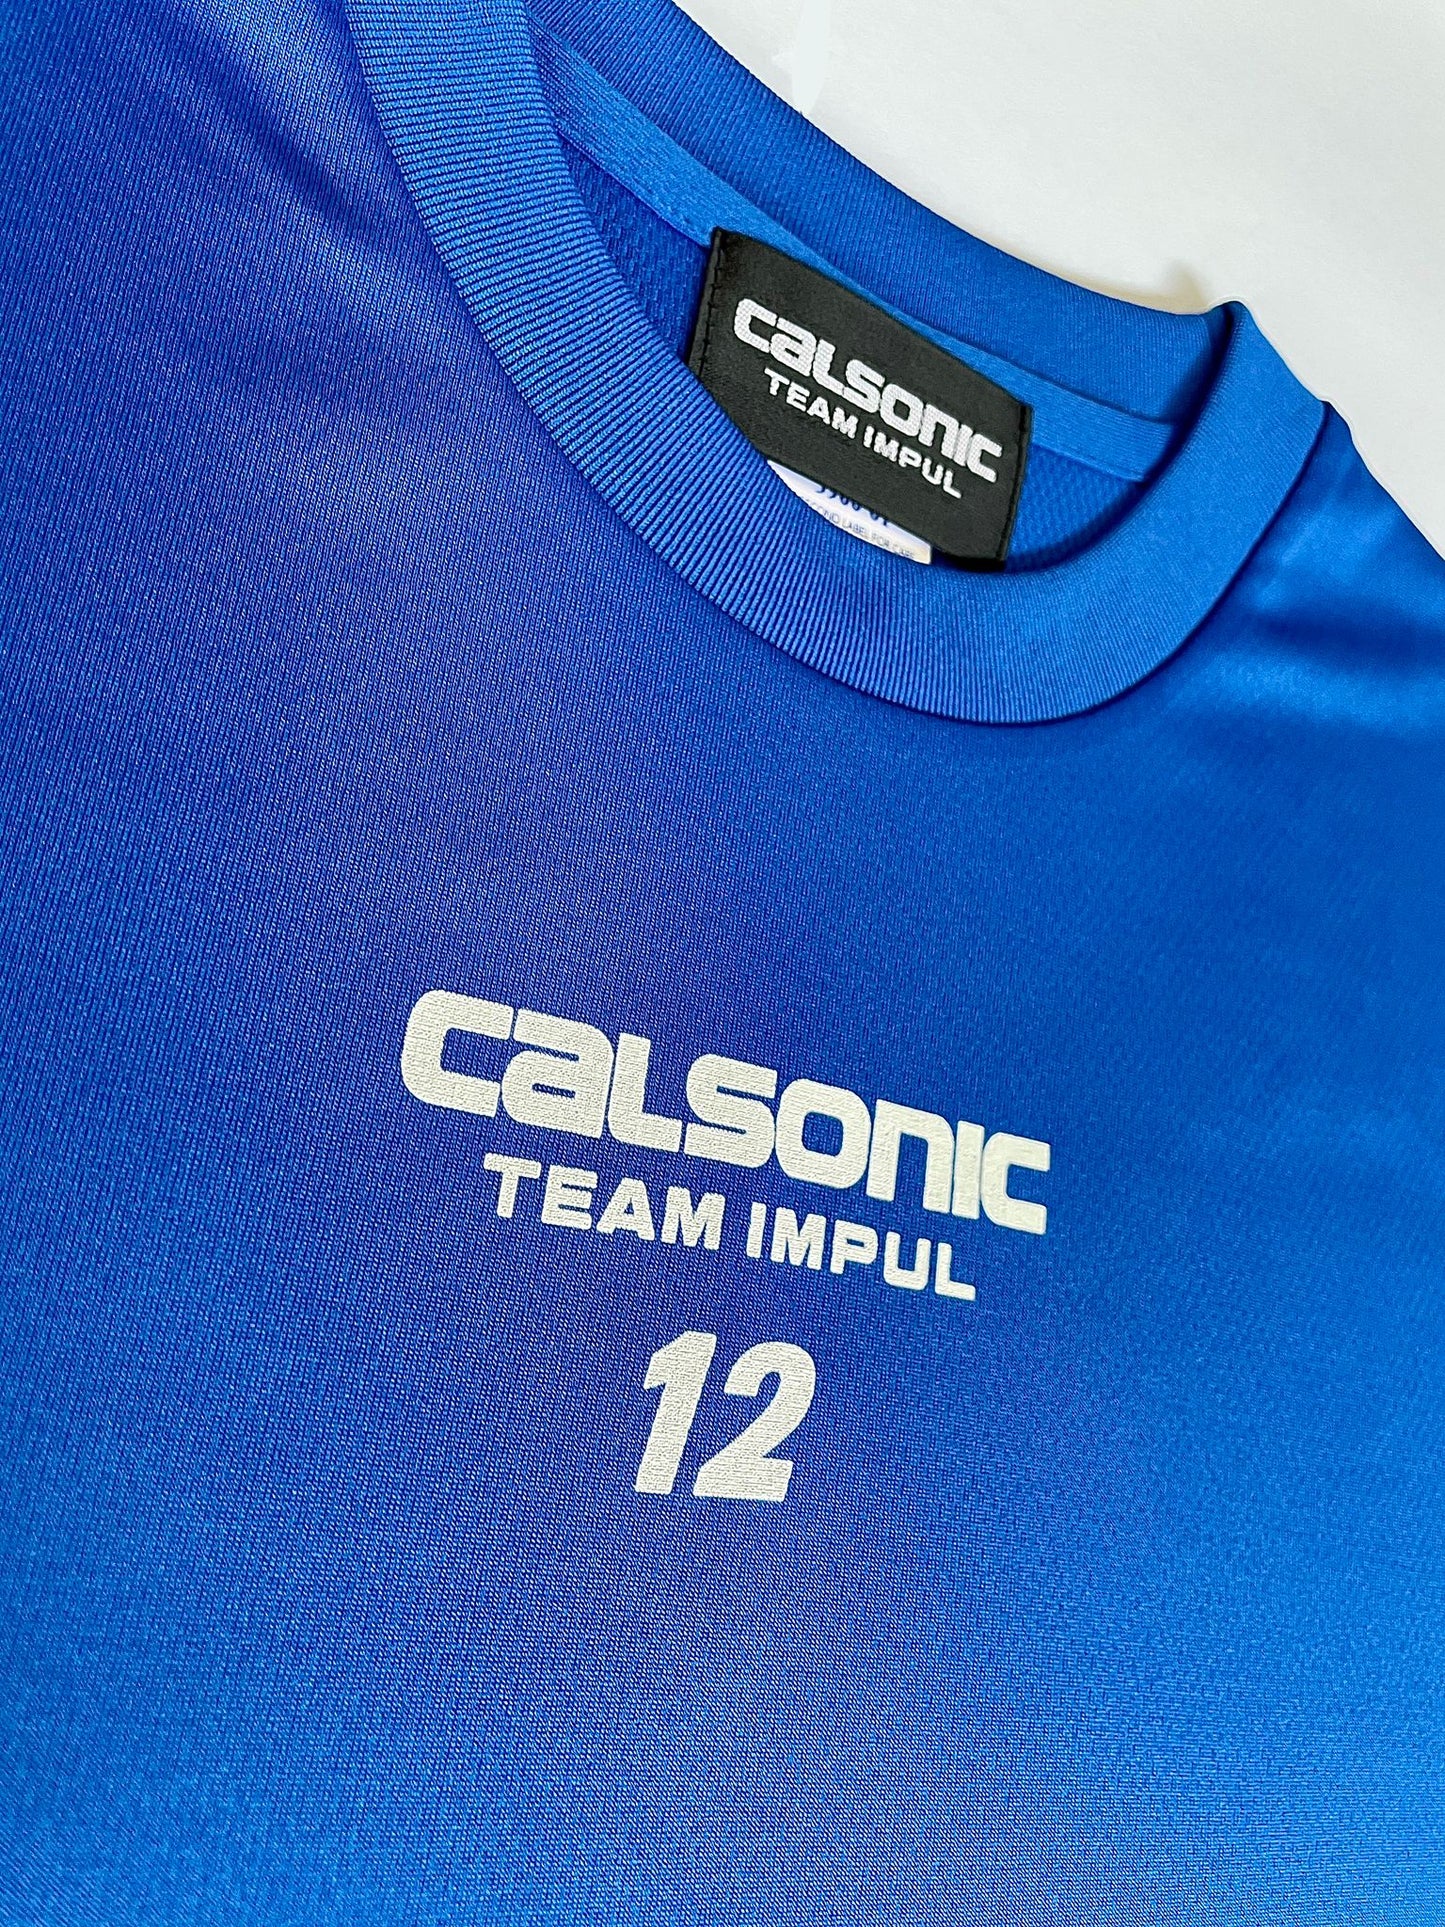 Calsonic Team Impul #12 T-Shirt (Size: M)